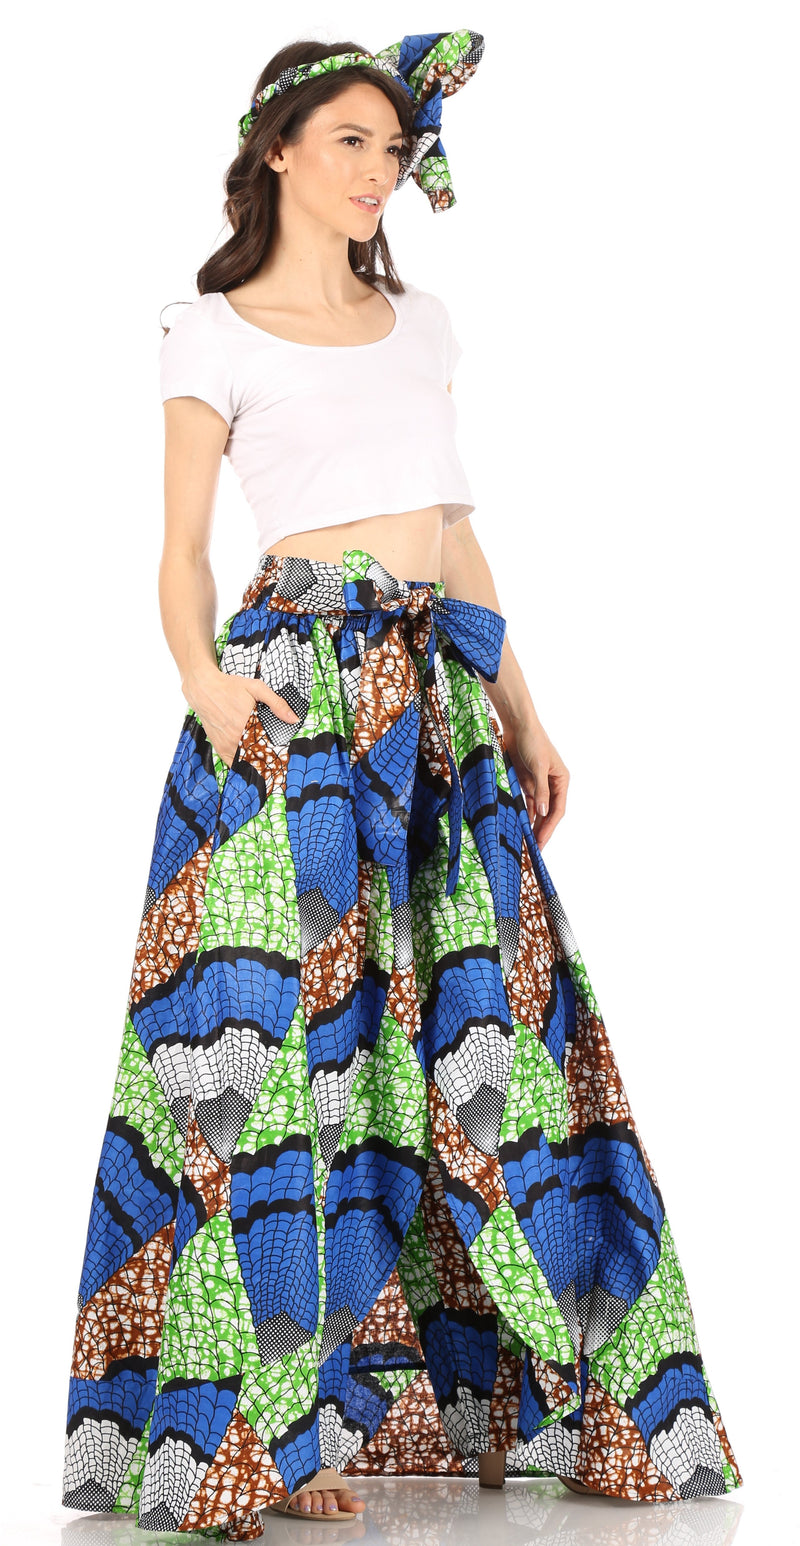 Sakkas Lanna Women's African Ankara Print Ankle Pants w/Pockets & Overlay Pull-up